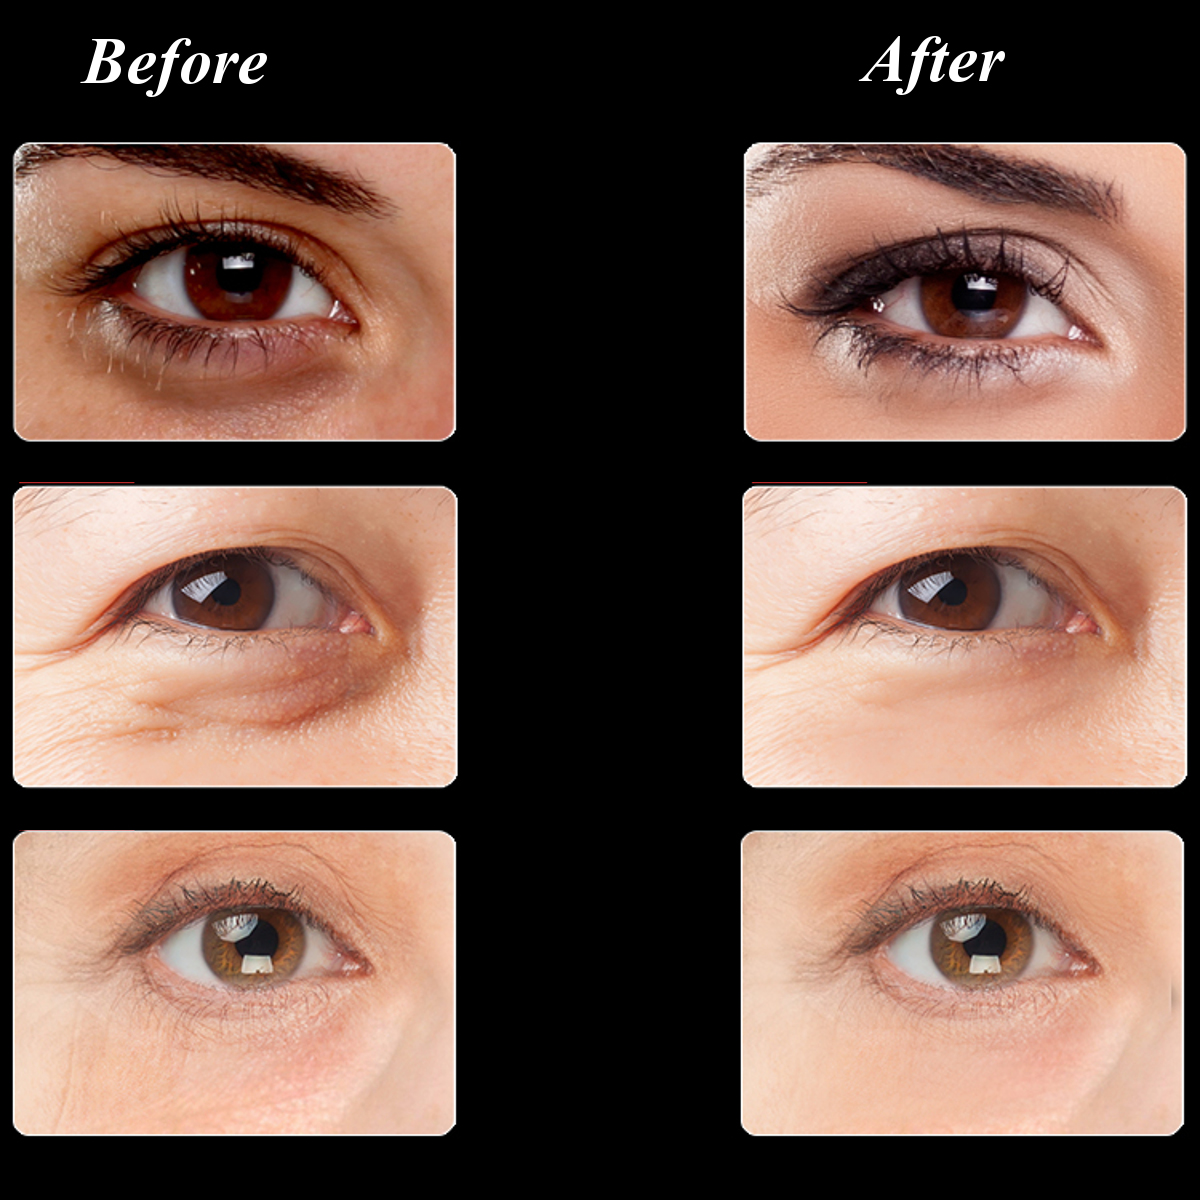 Mabox Eye Gel Cream Anti-Wrinkles Remove Dark Circle Lighten